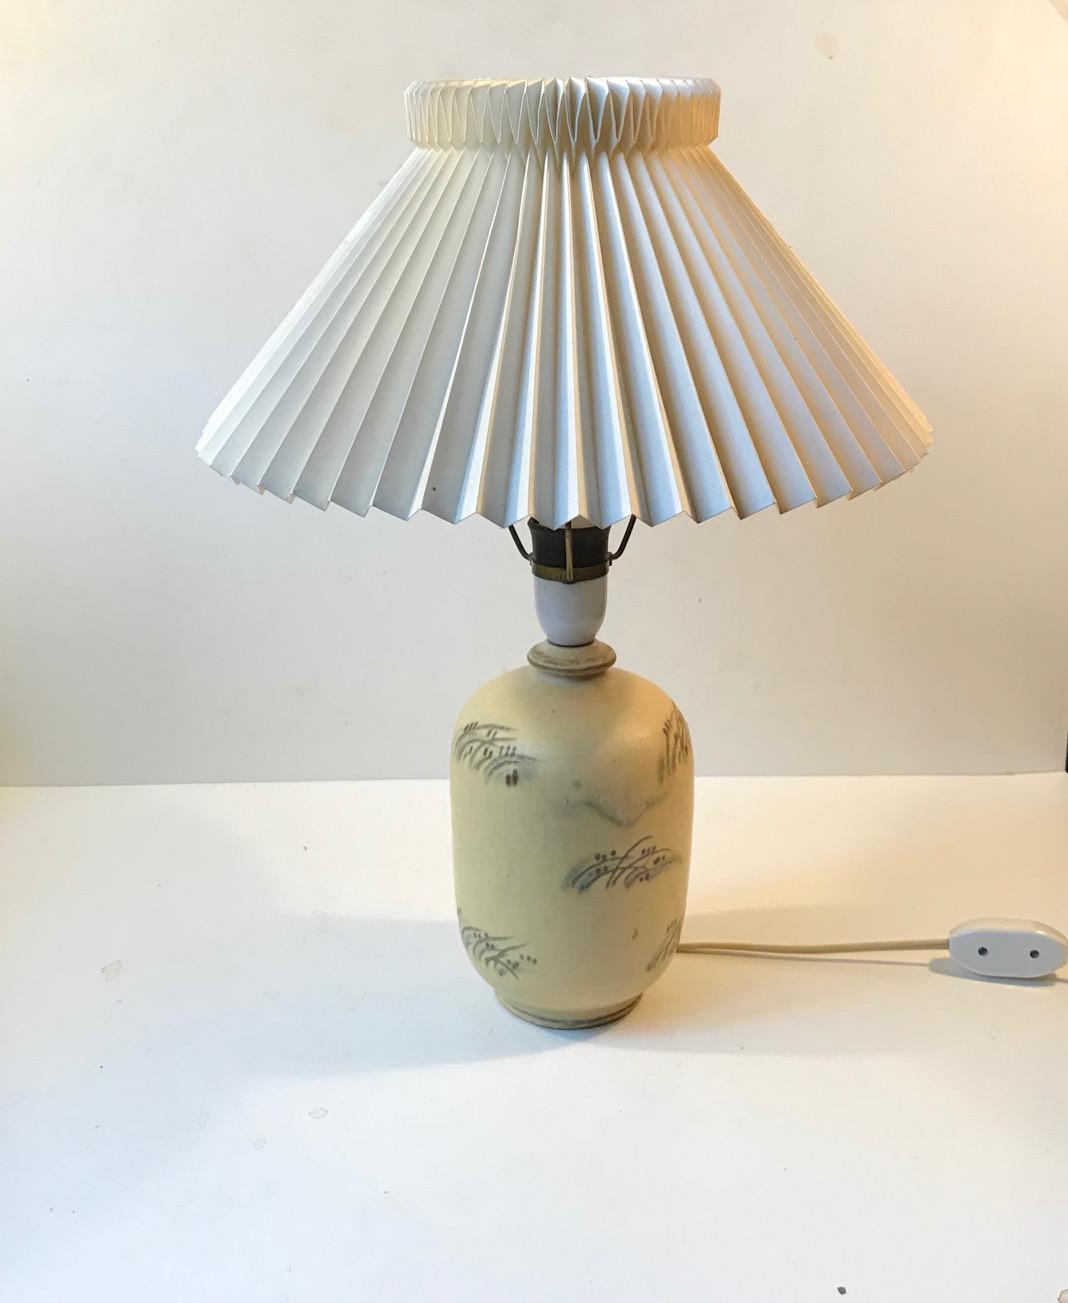 Earthenware Danish Art Deco Ceramic Table Lamp from Knabstrup, 1930s